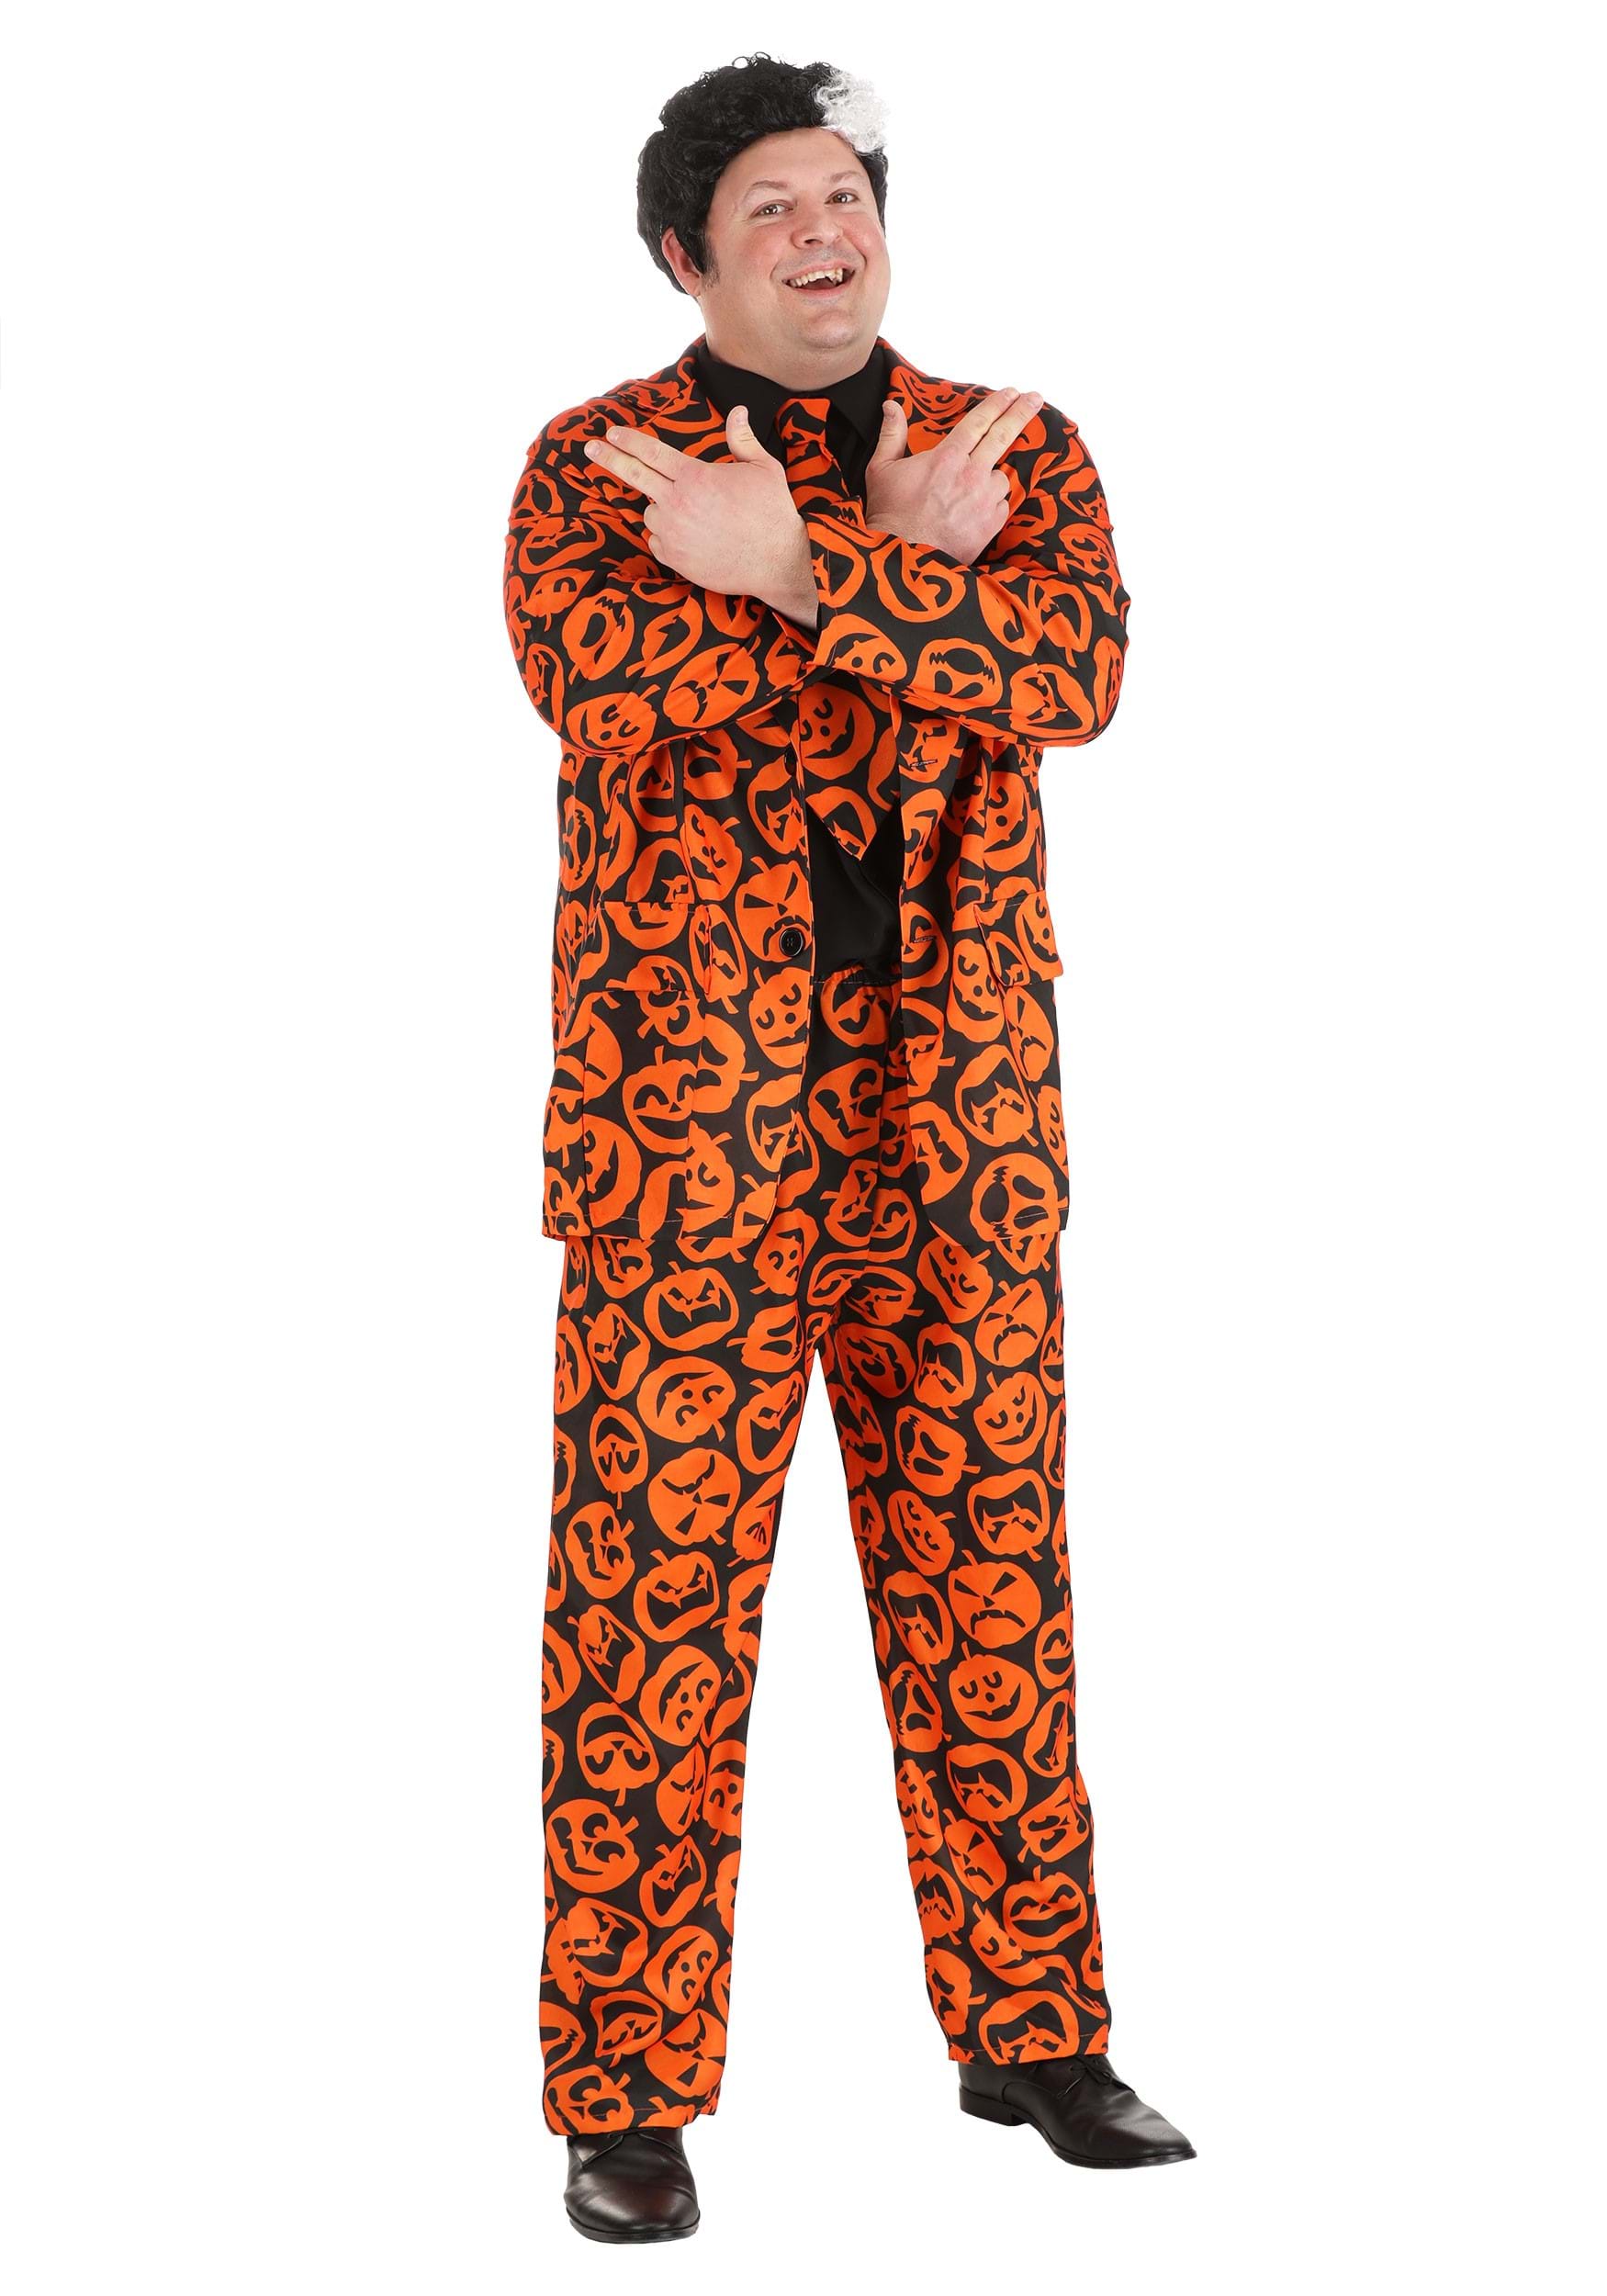 Image of Men's Plus Sized David S Pumpkins Costume Suit | SNL Costumes ID FUN141214PL-PL